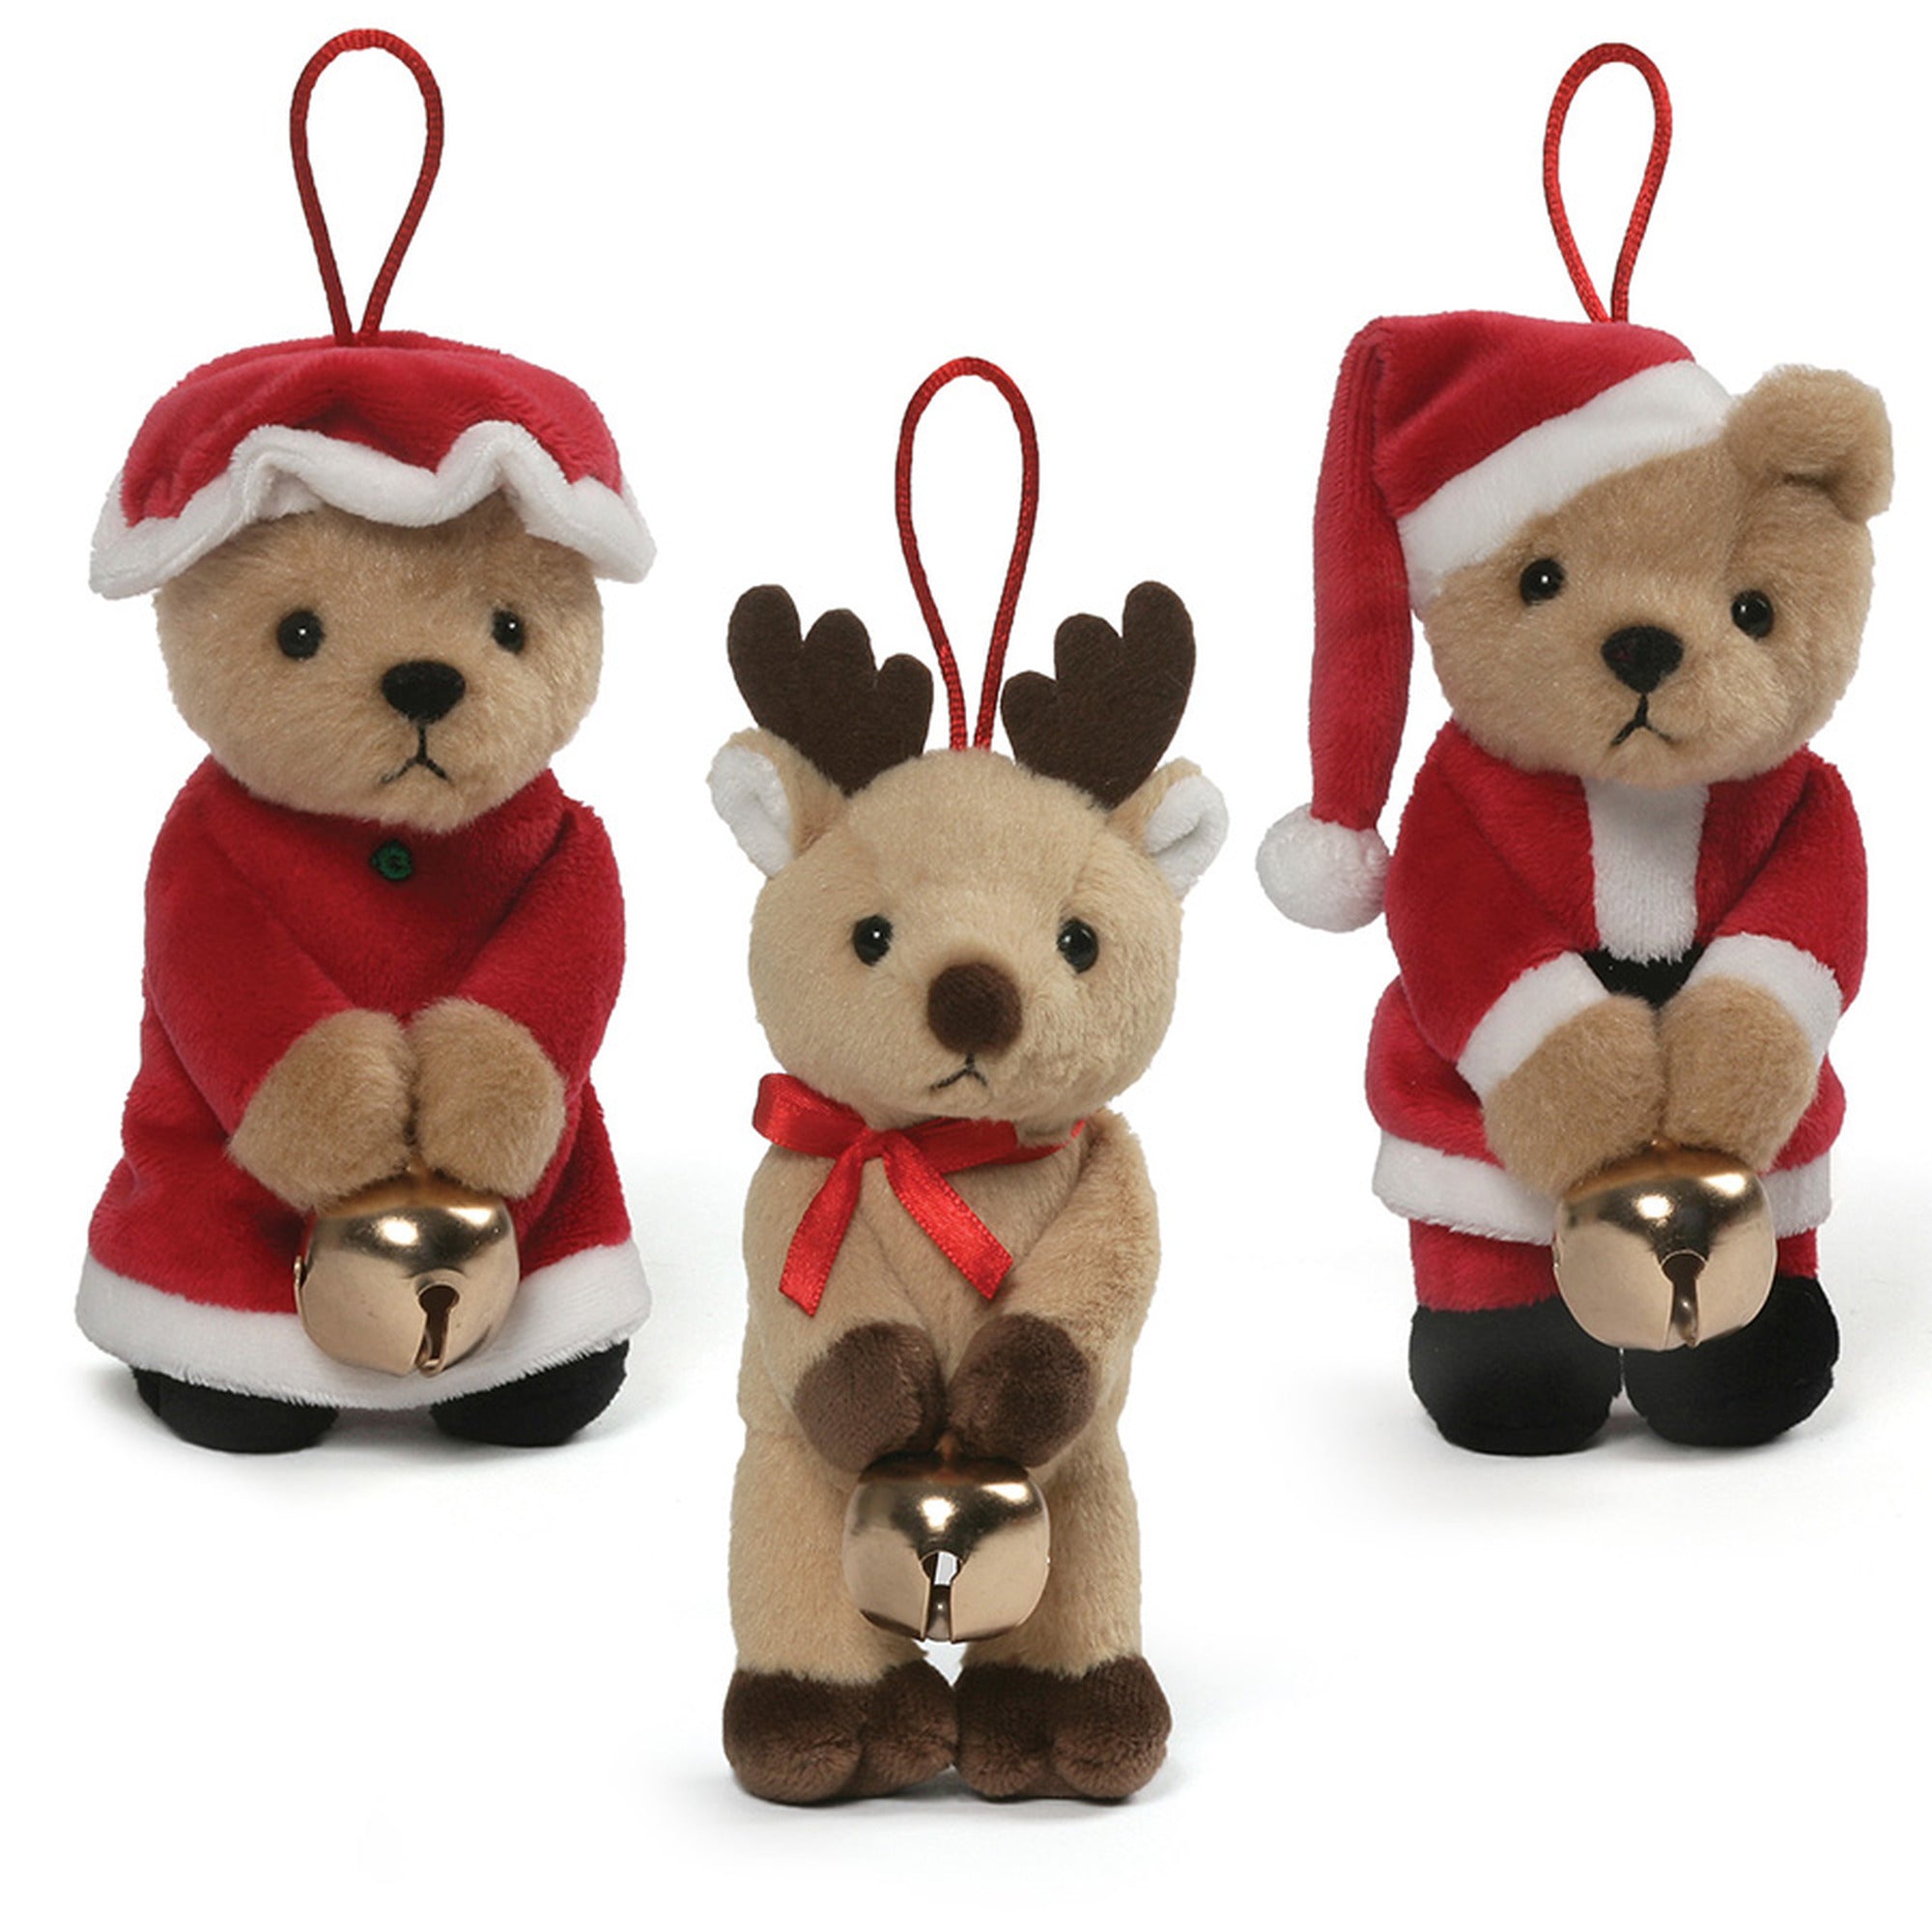 Gund - Jingle Ornaments - 3 styles